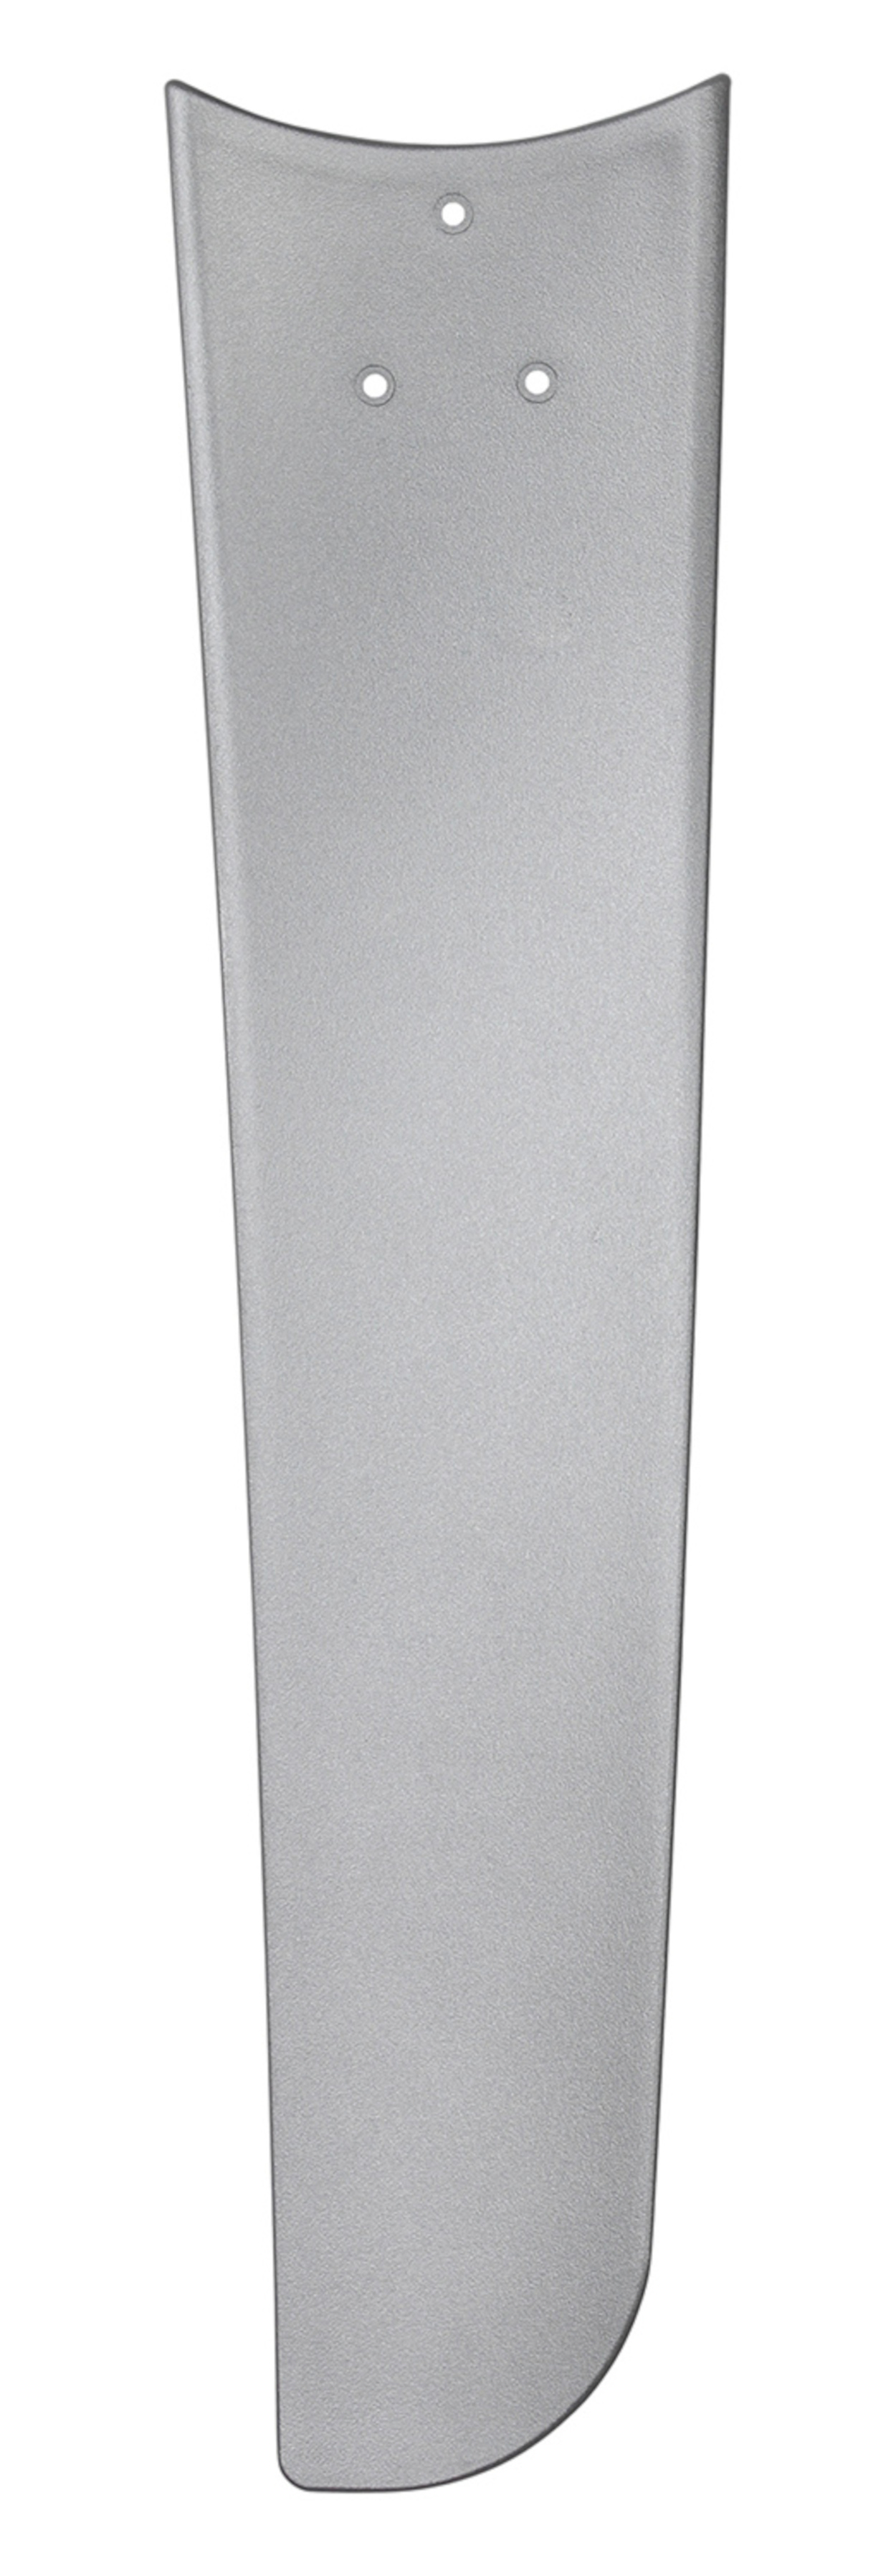 CASAFAN Silber Grau Mirage Deckenventilator / Watt) (62